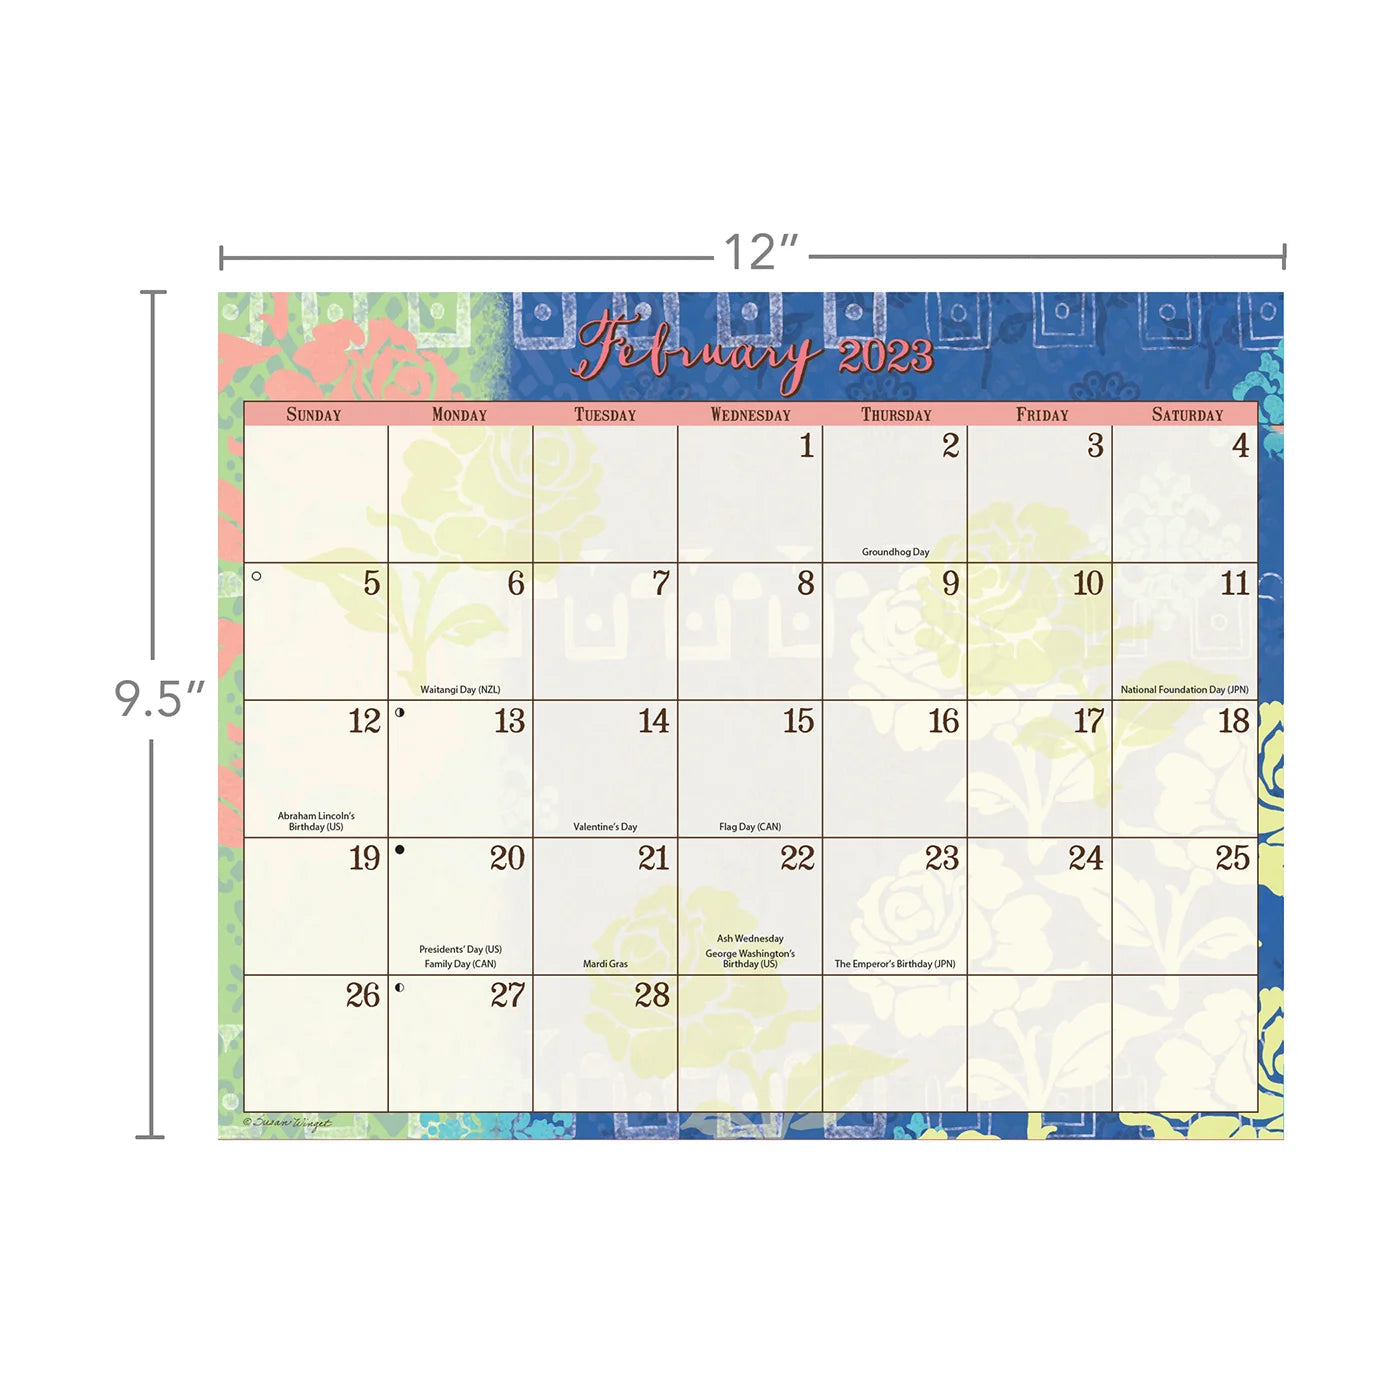 2023 LANG Bohemian By Susan Winget Tri-View - 3-Month View Calendar